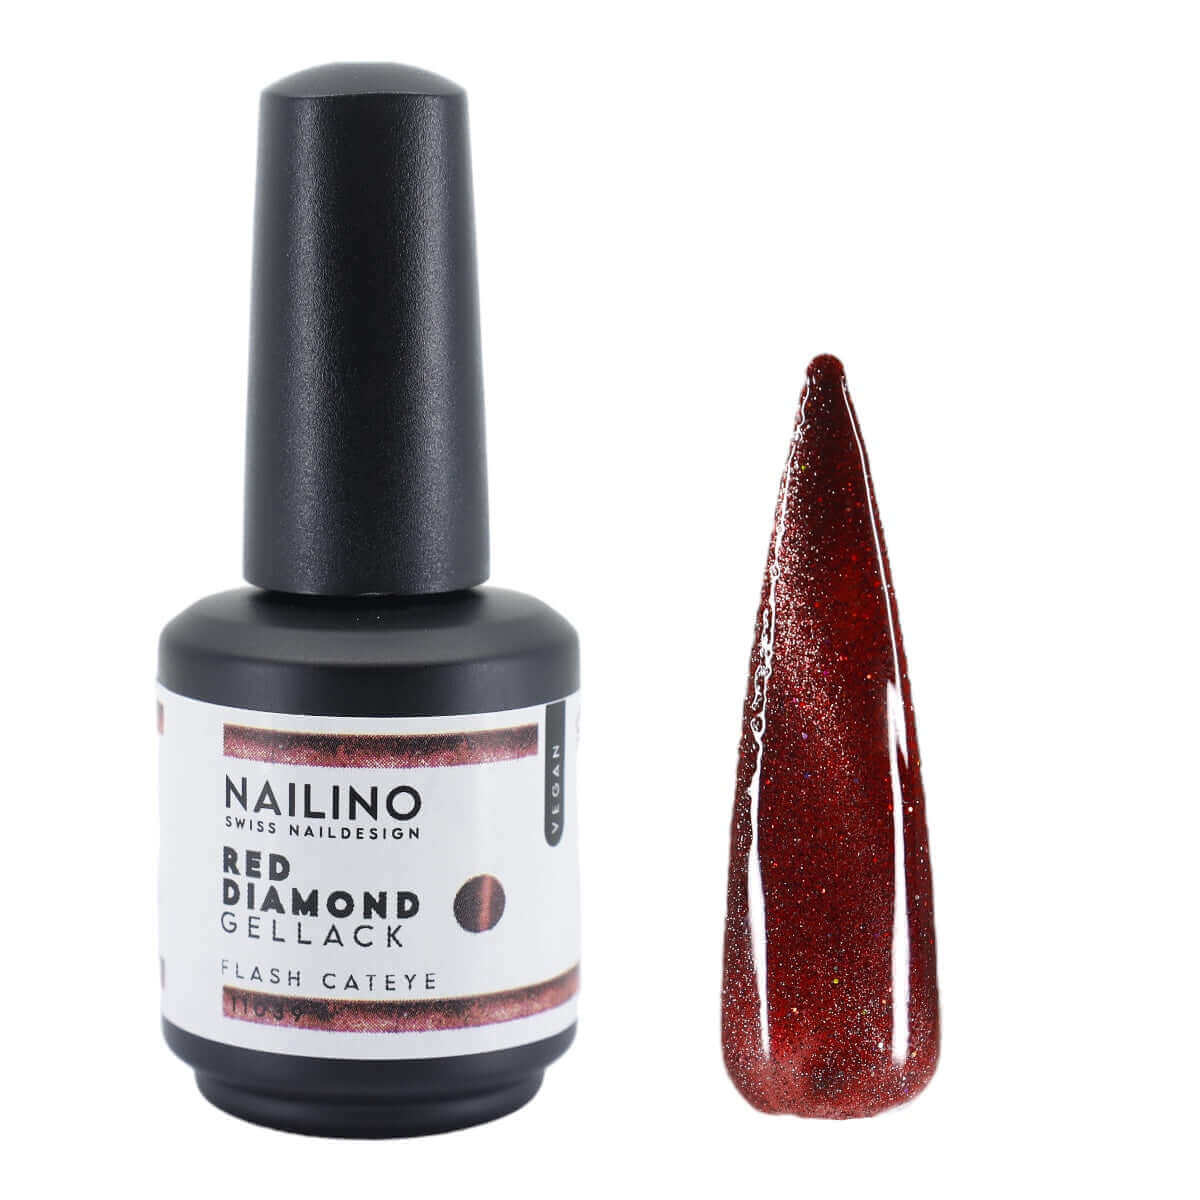 NAILINO Shellac Red Diamond -